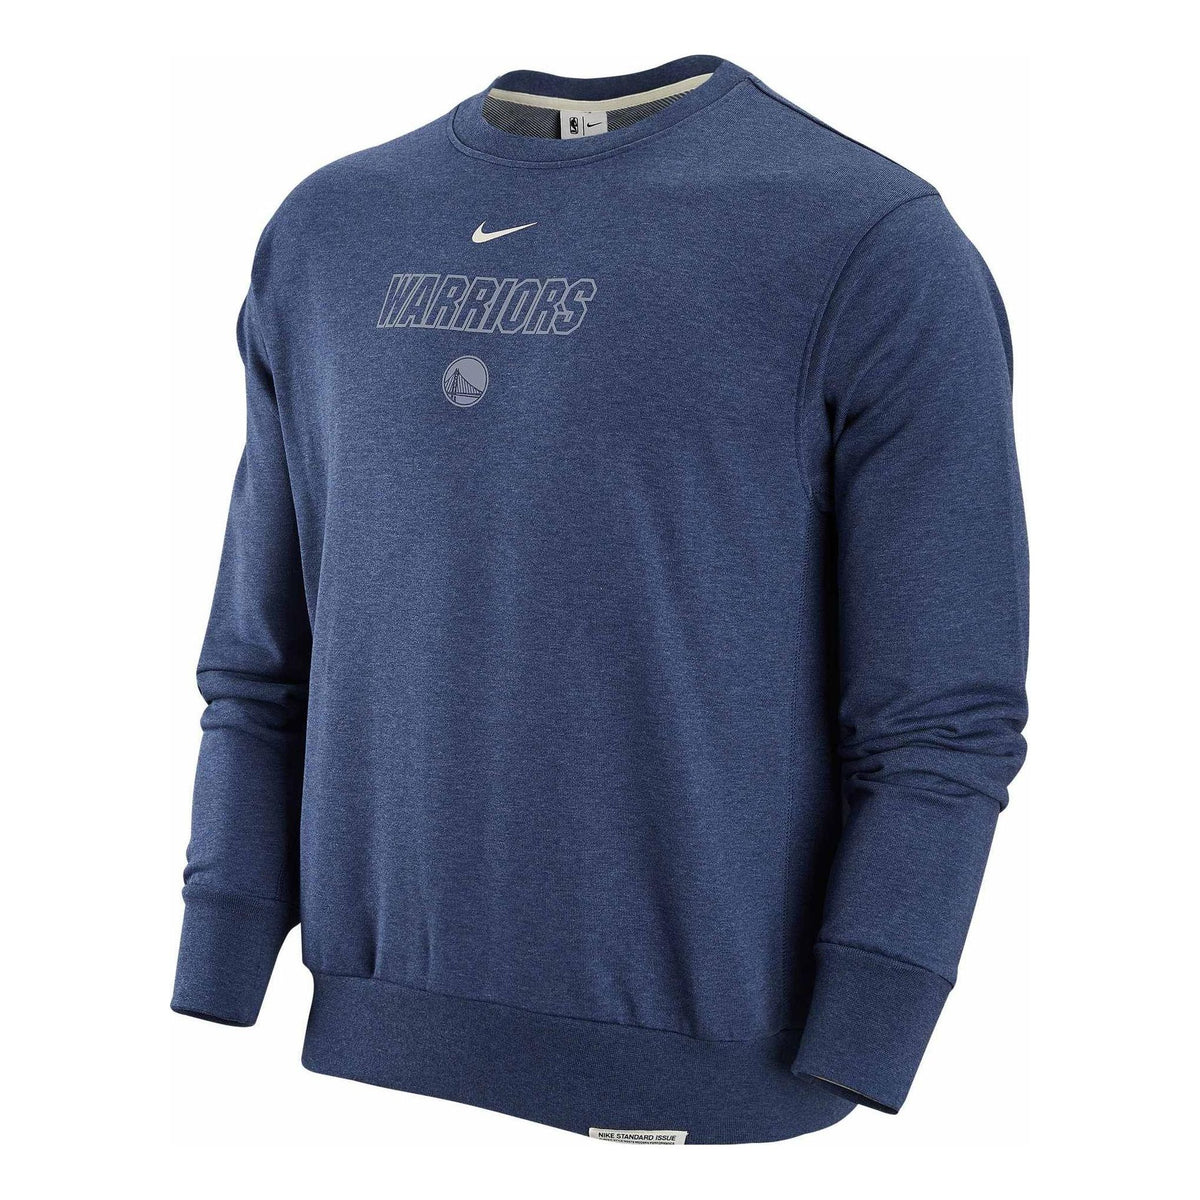 Nike Warriors logo sweatshirt 'Blue' FB5349-437 - KICKS CREW